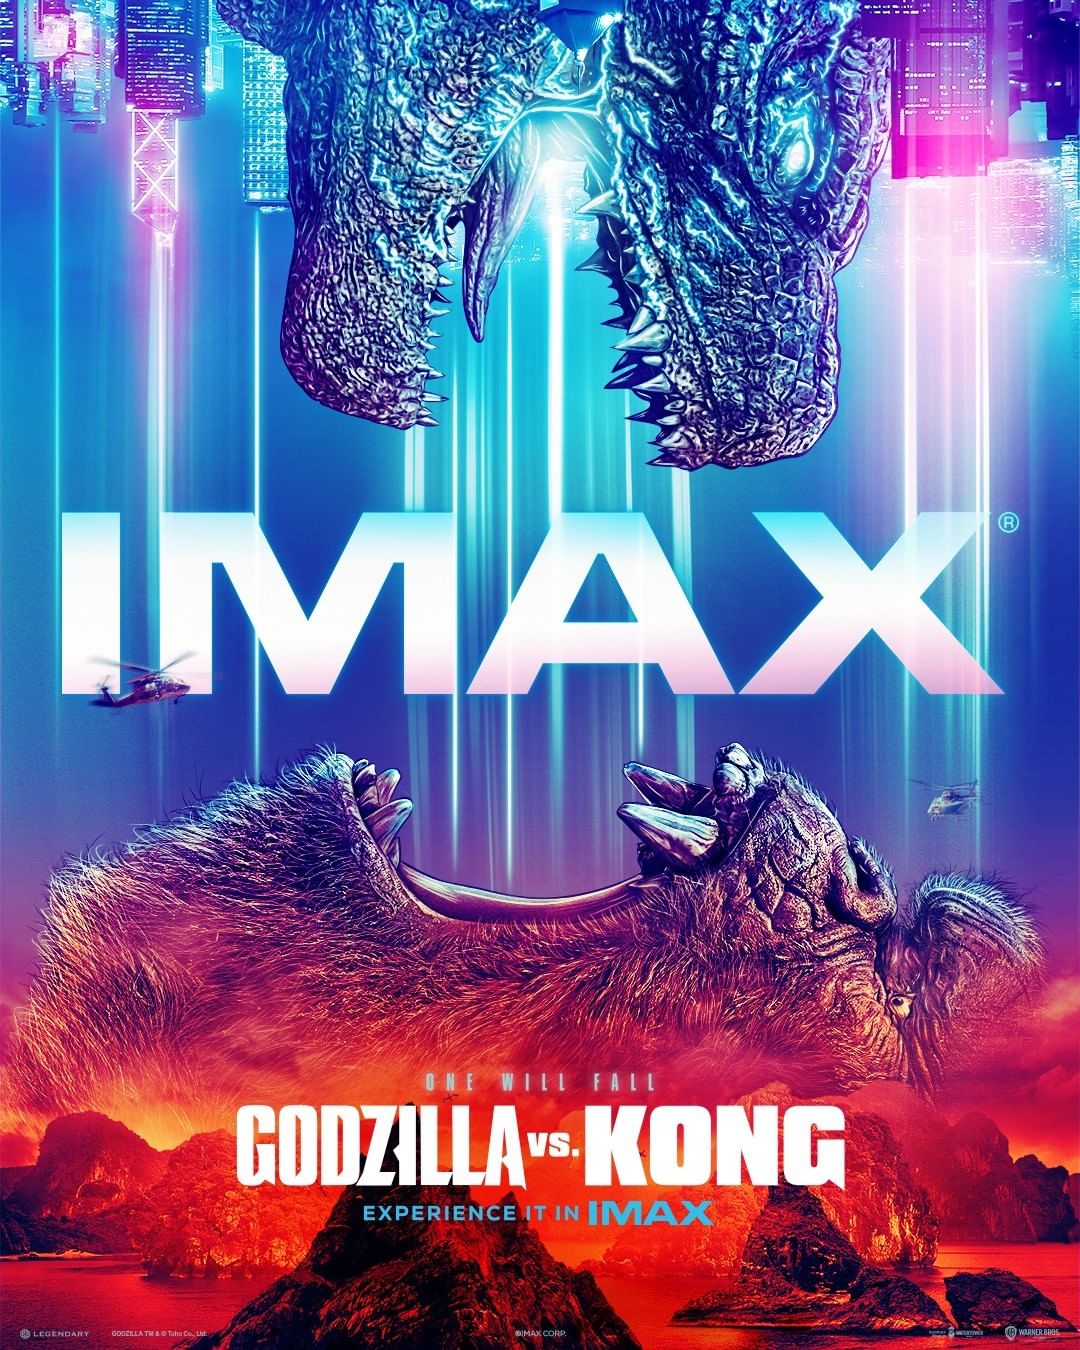 New Godzilla vs. Kong IMAX Poster Released